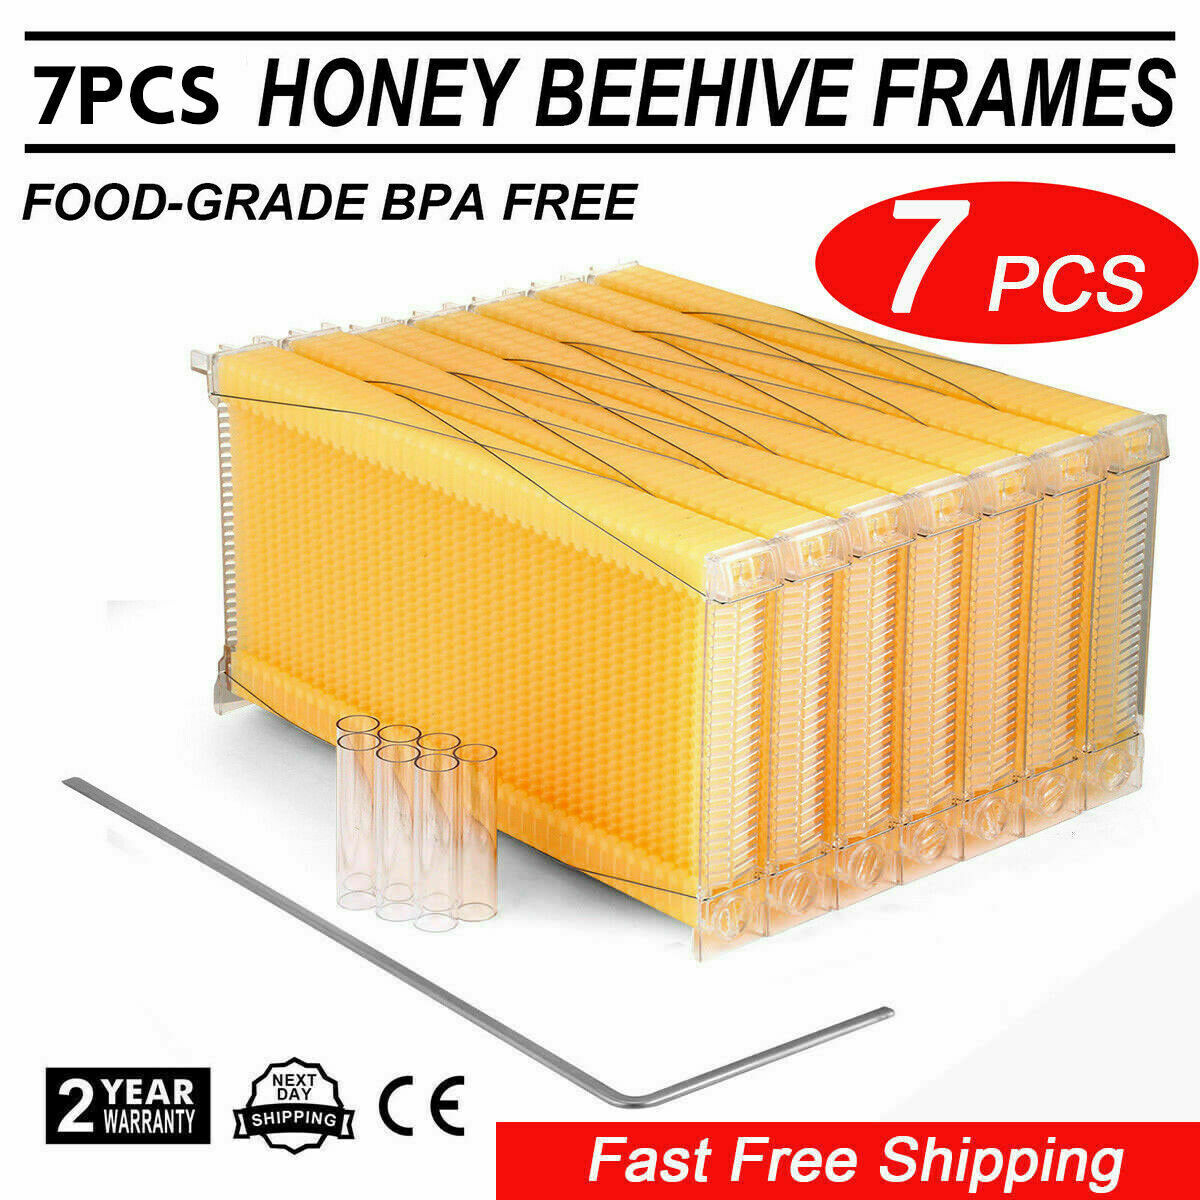 7Pcs Honey Hive Beehive Frames Beekeeping Wooden House Up Box Set US Stock 